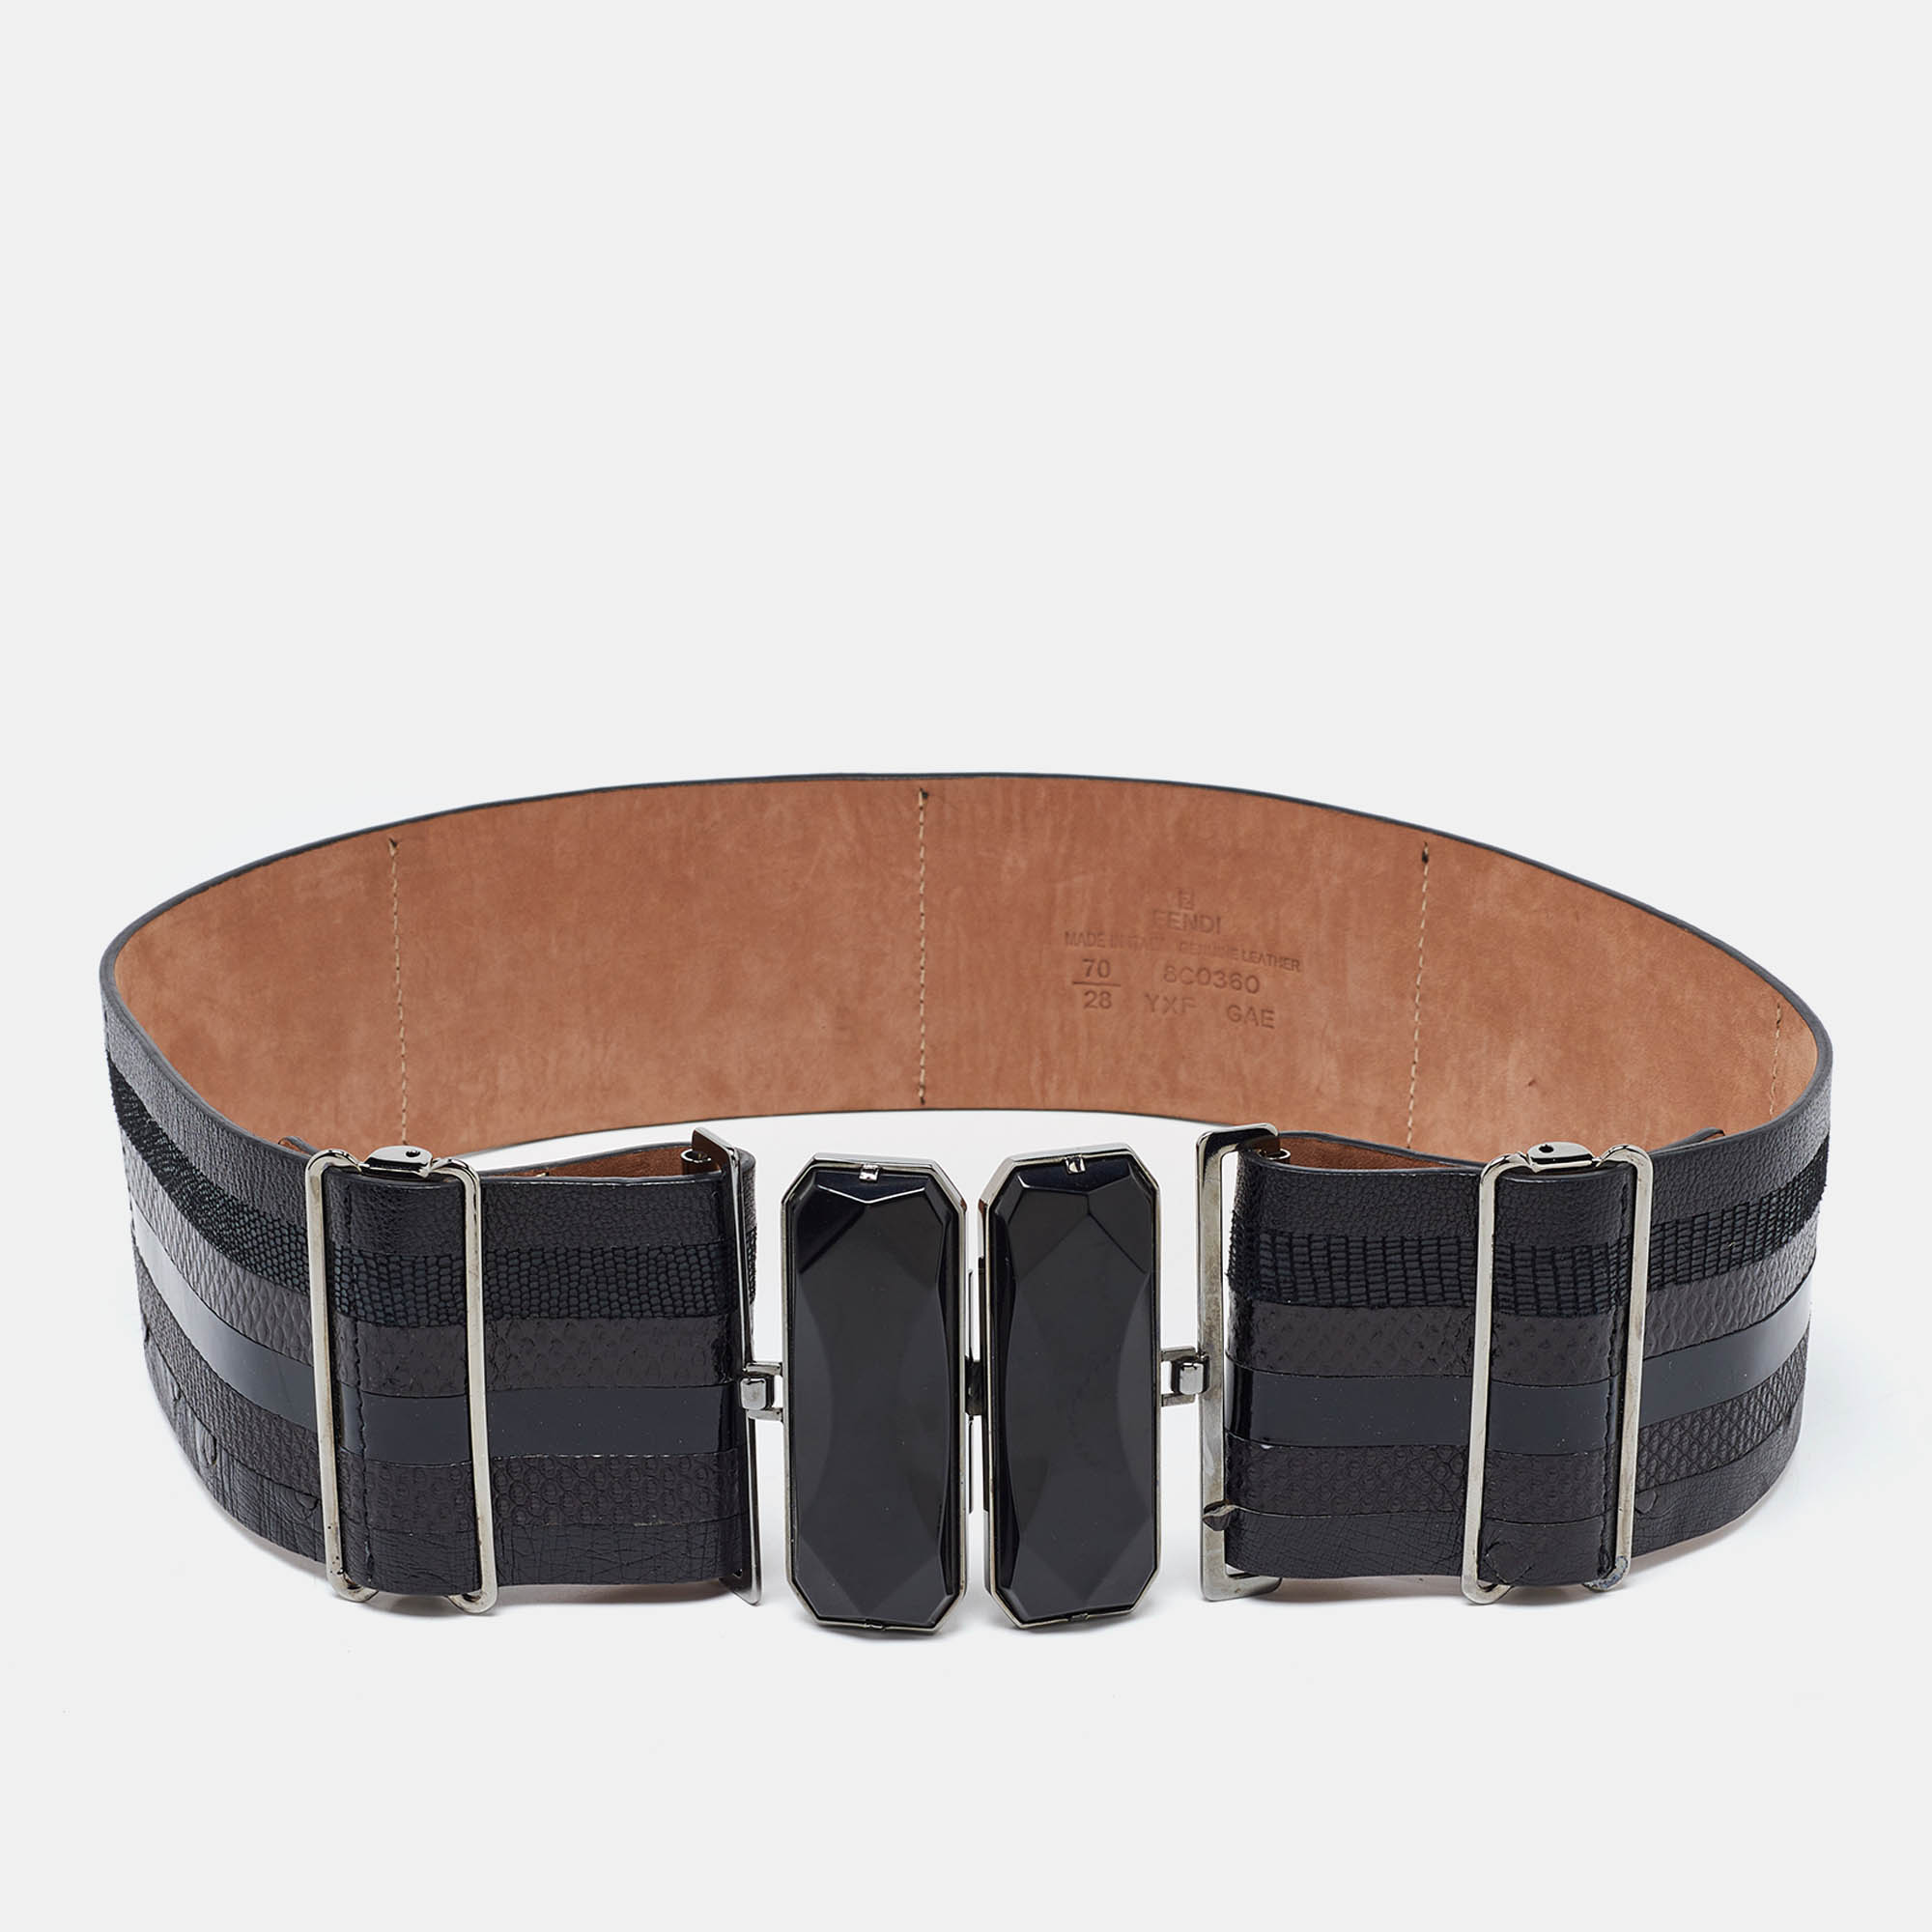 Fendi black karung, patent and leather wide waist belt 70cm